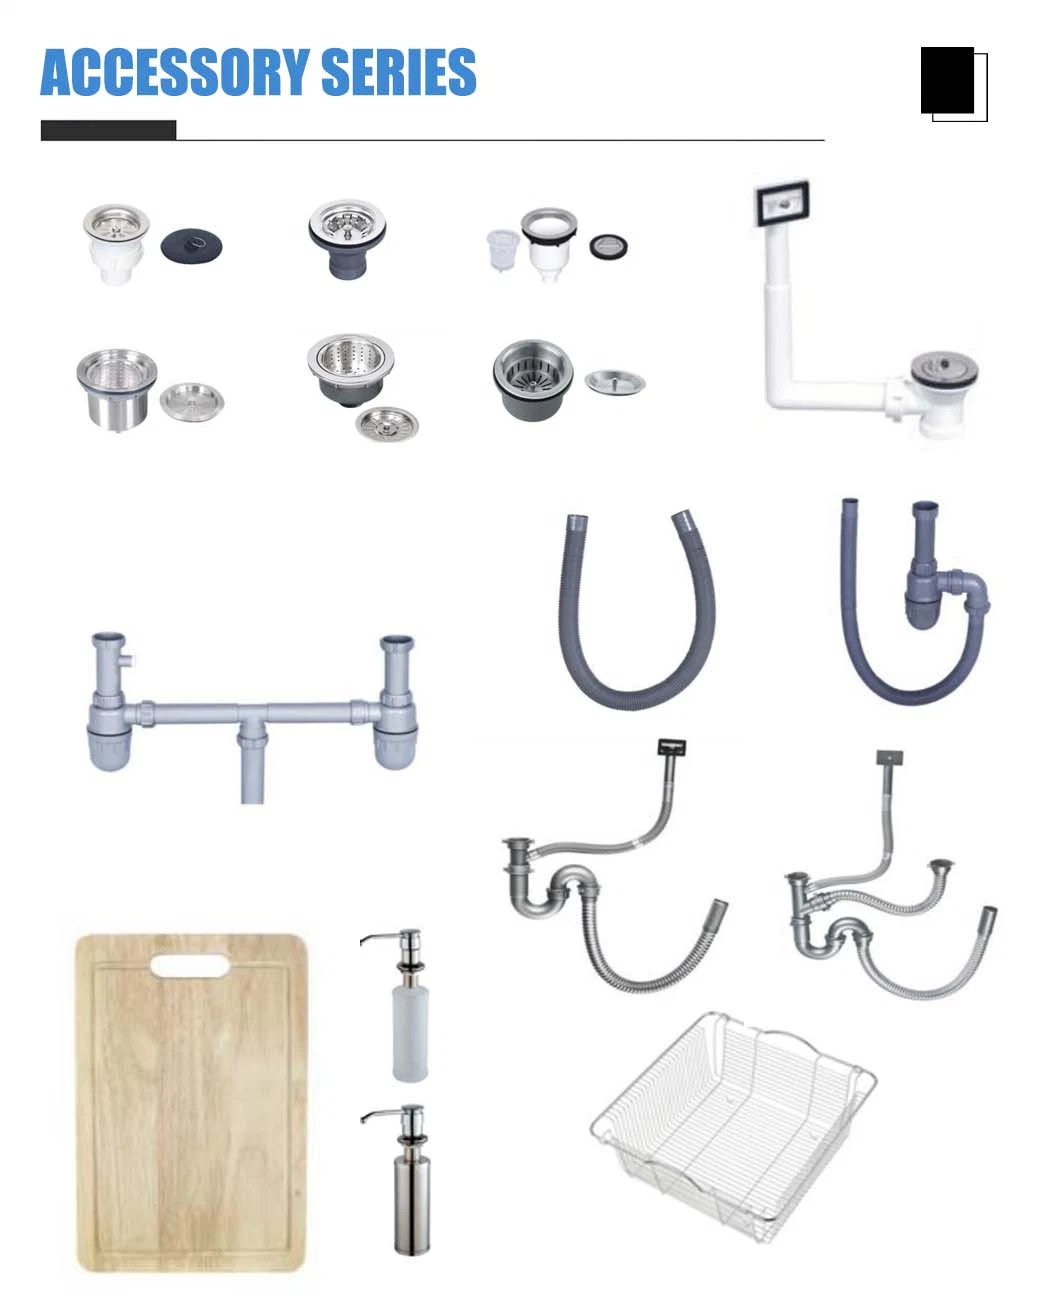 Fashion Bathroom Basin Design Small Layon Stainless Steel Kitchen Sink OEM Brand Customized